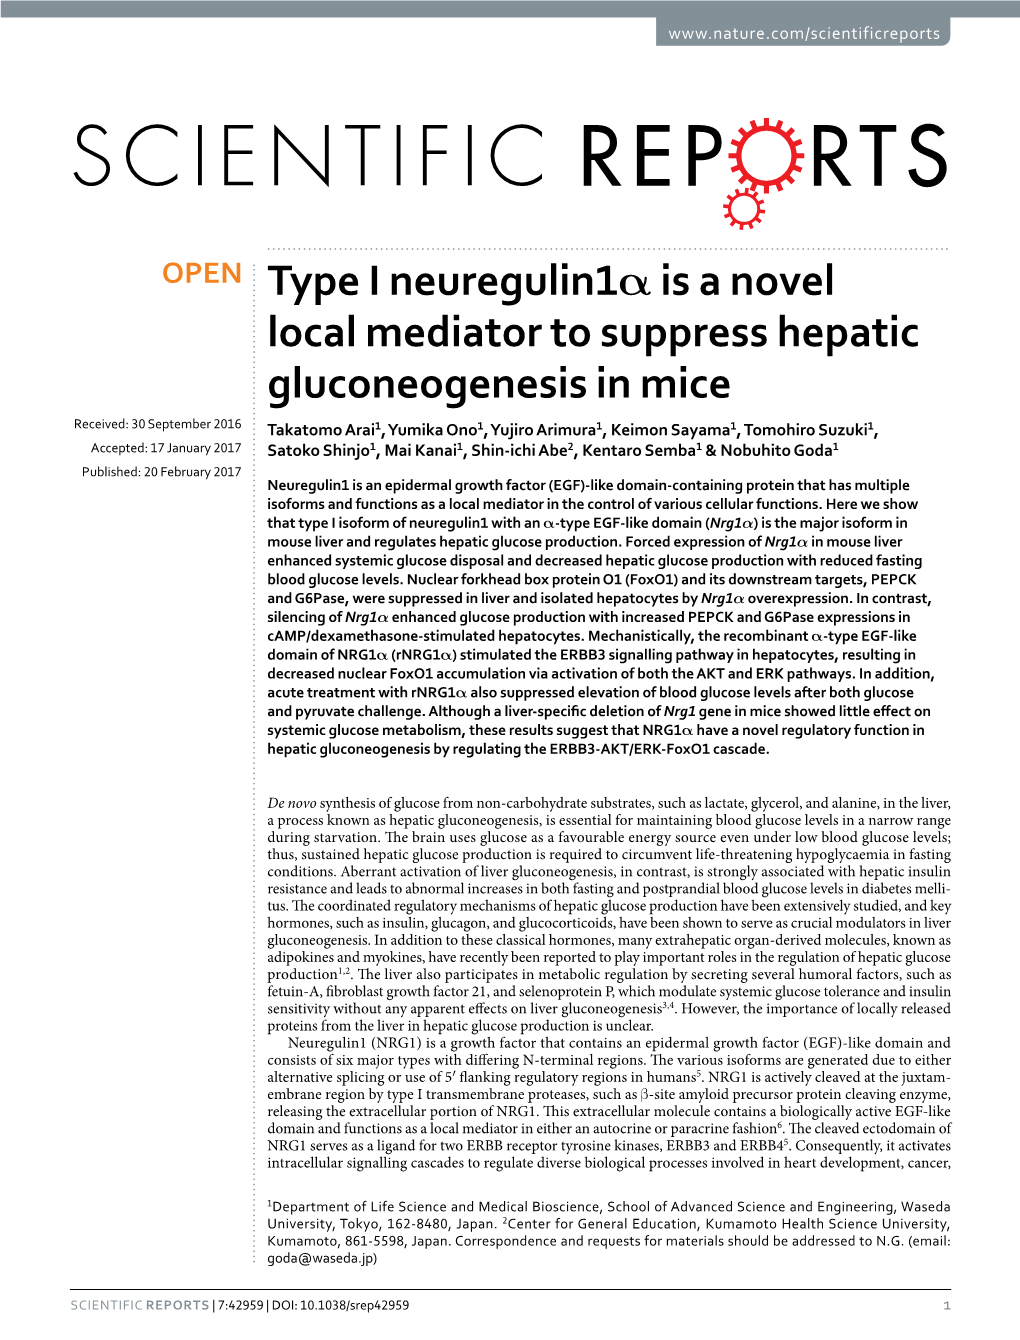 Type I Neuregulin1α Is a Novel Local Mediator to Suppress Hepatic